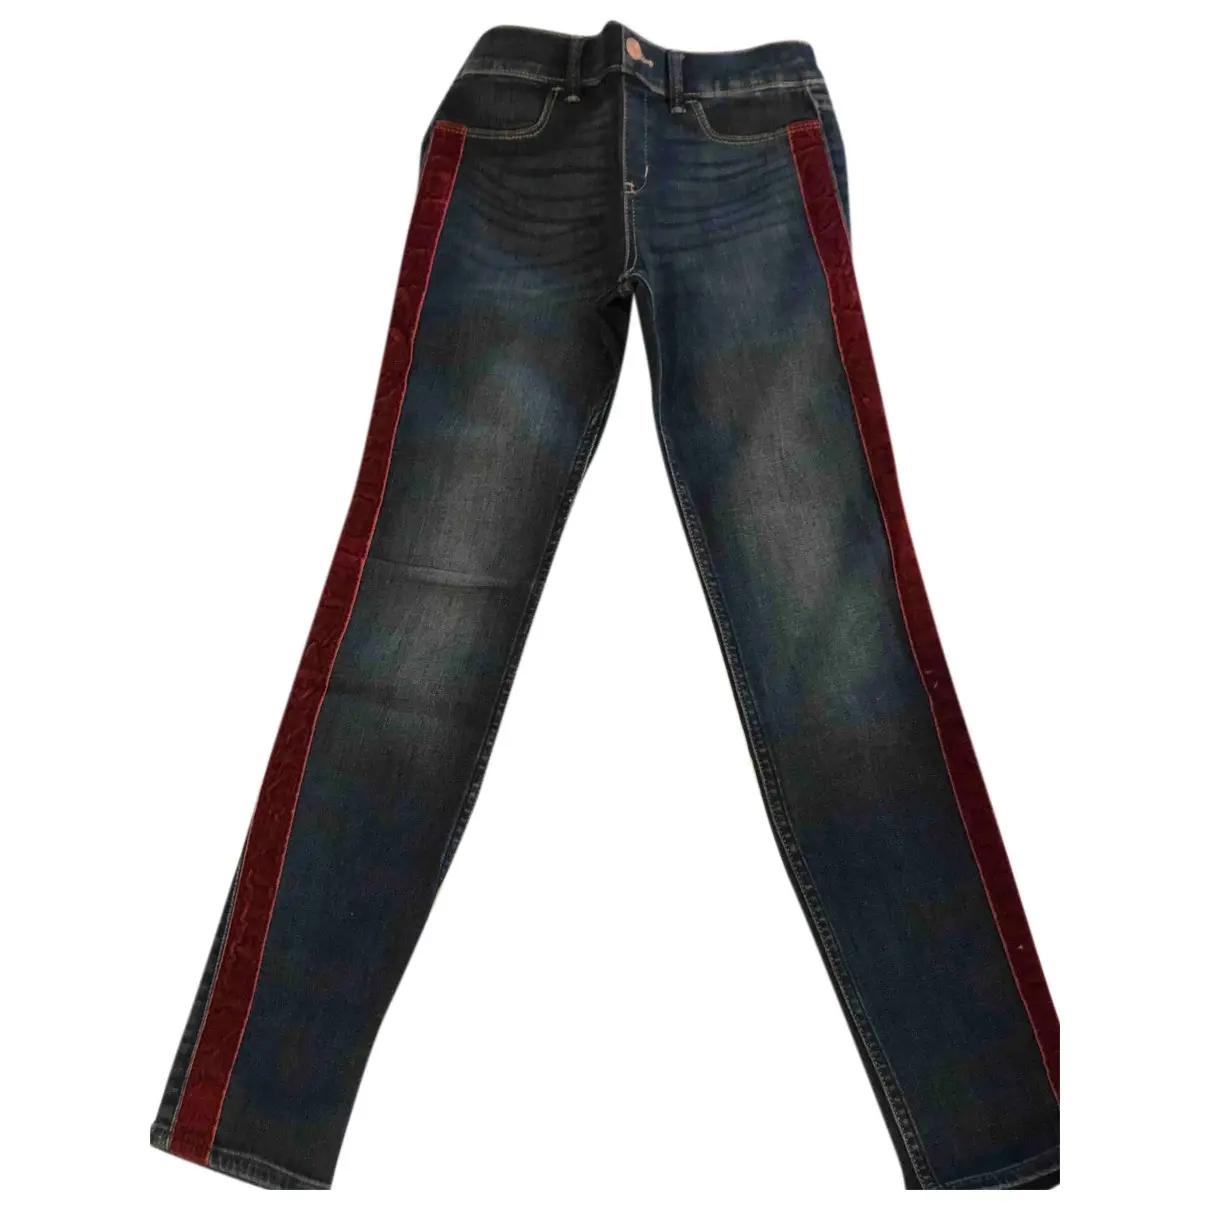 Blue Denim - Jeans Trousers Abercrombie & Fitch